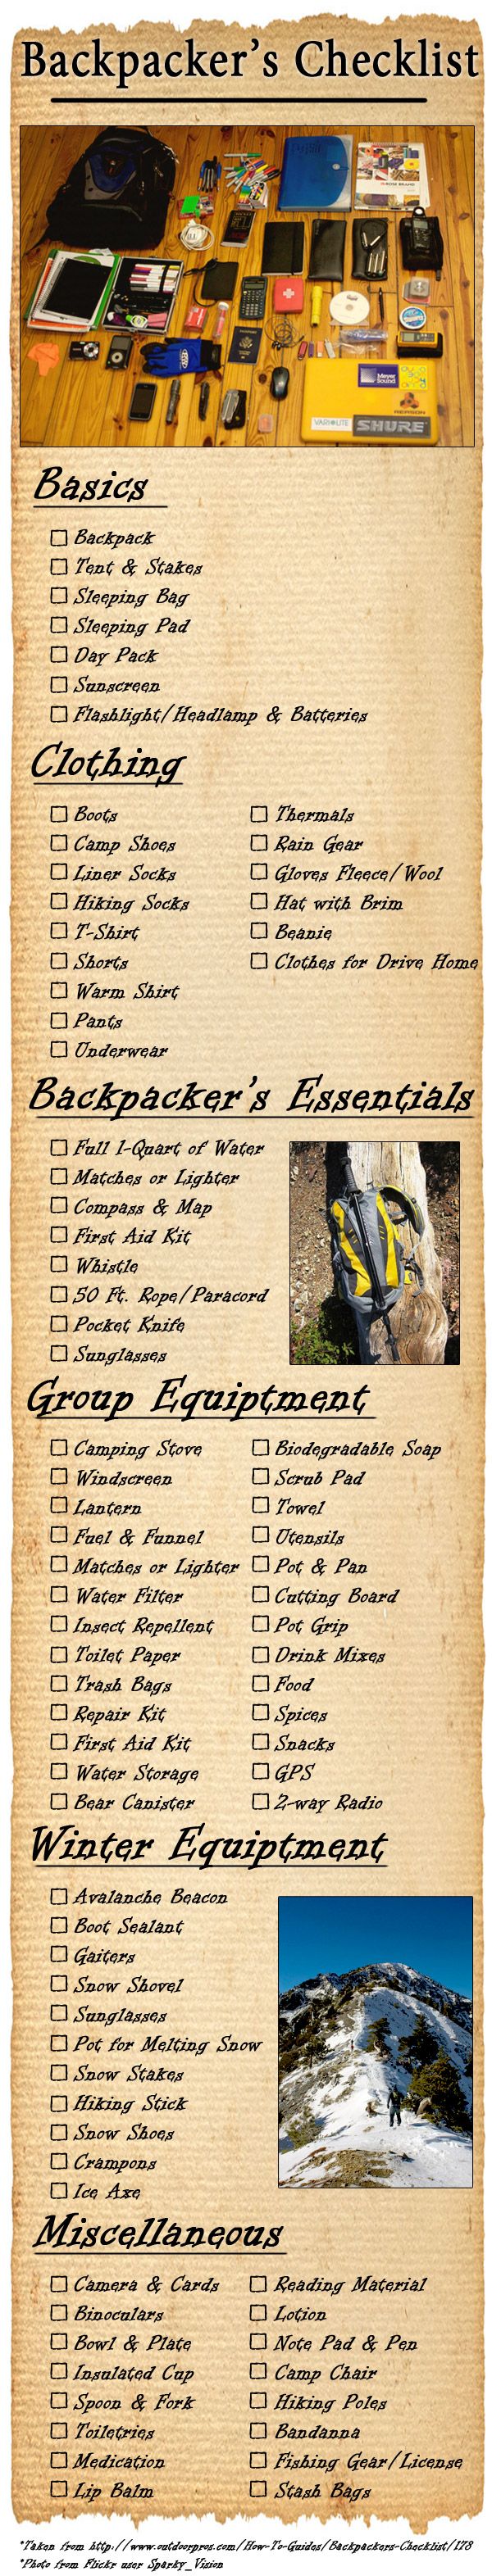 backpacker checklist